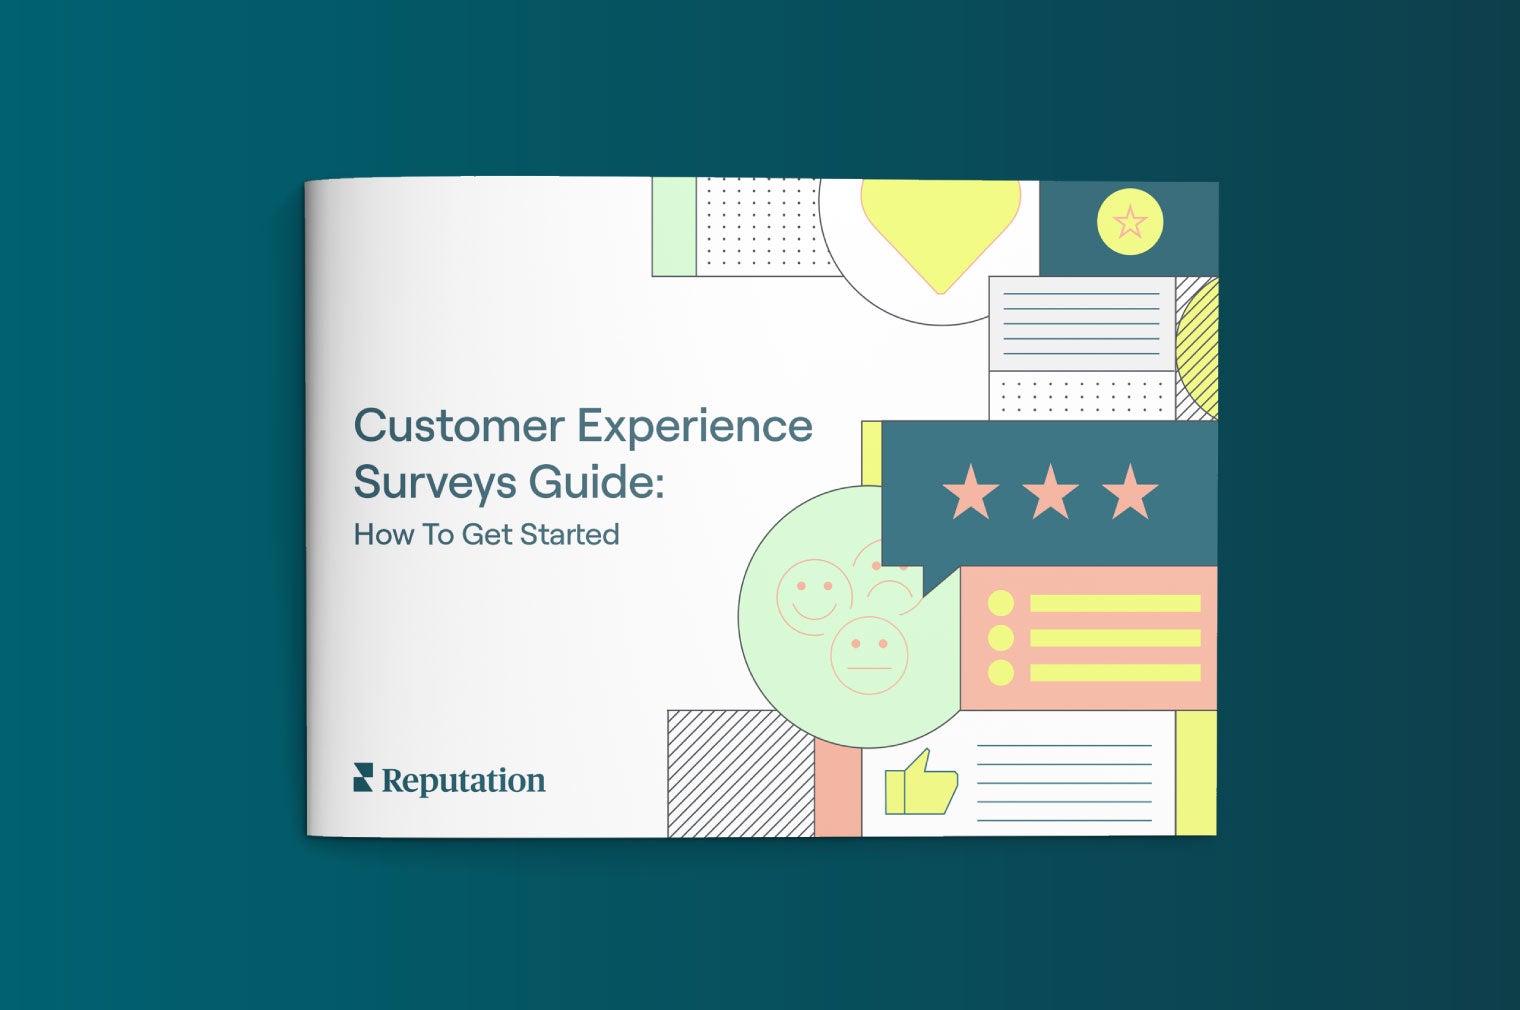 Customer Experience Surveys Guide